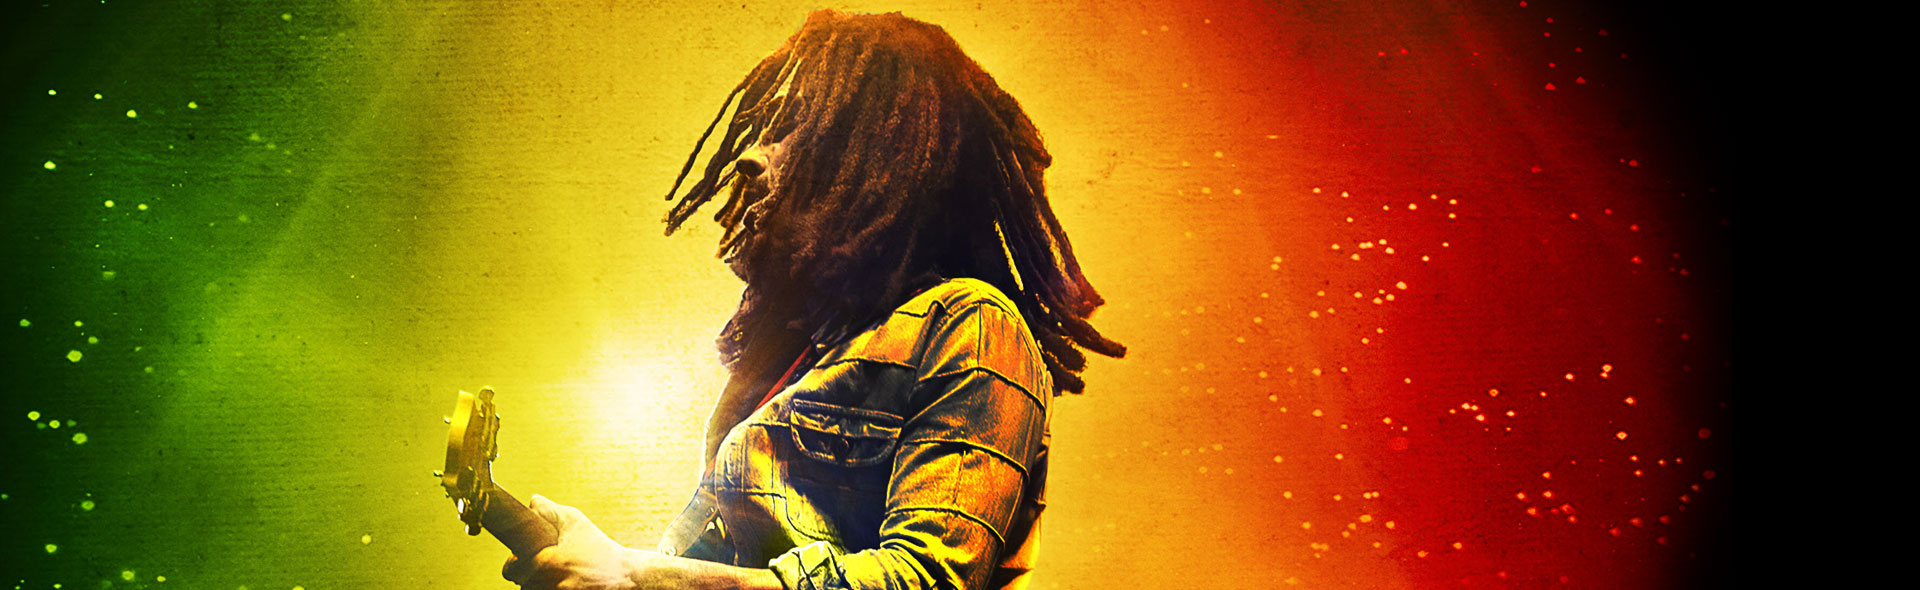 Bob Marley: One Love_slide_poster